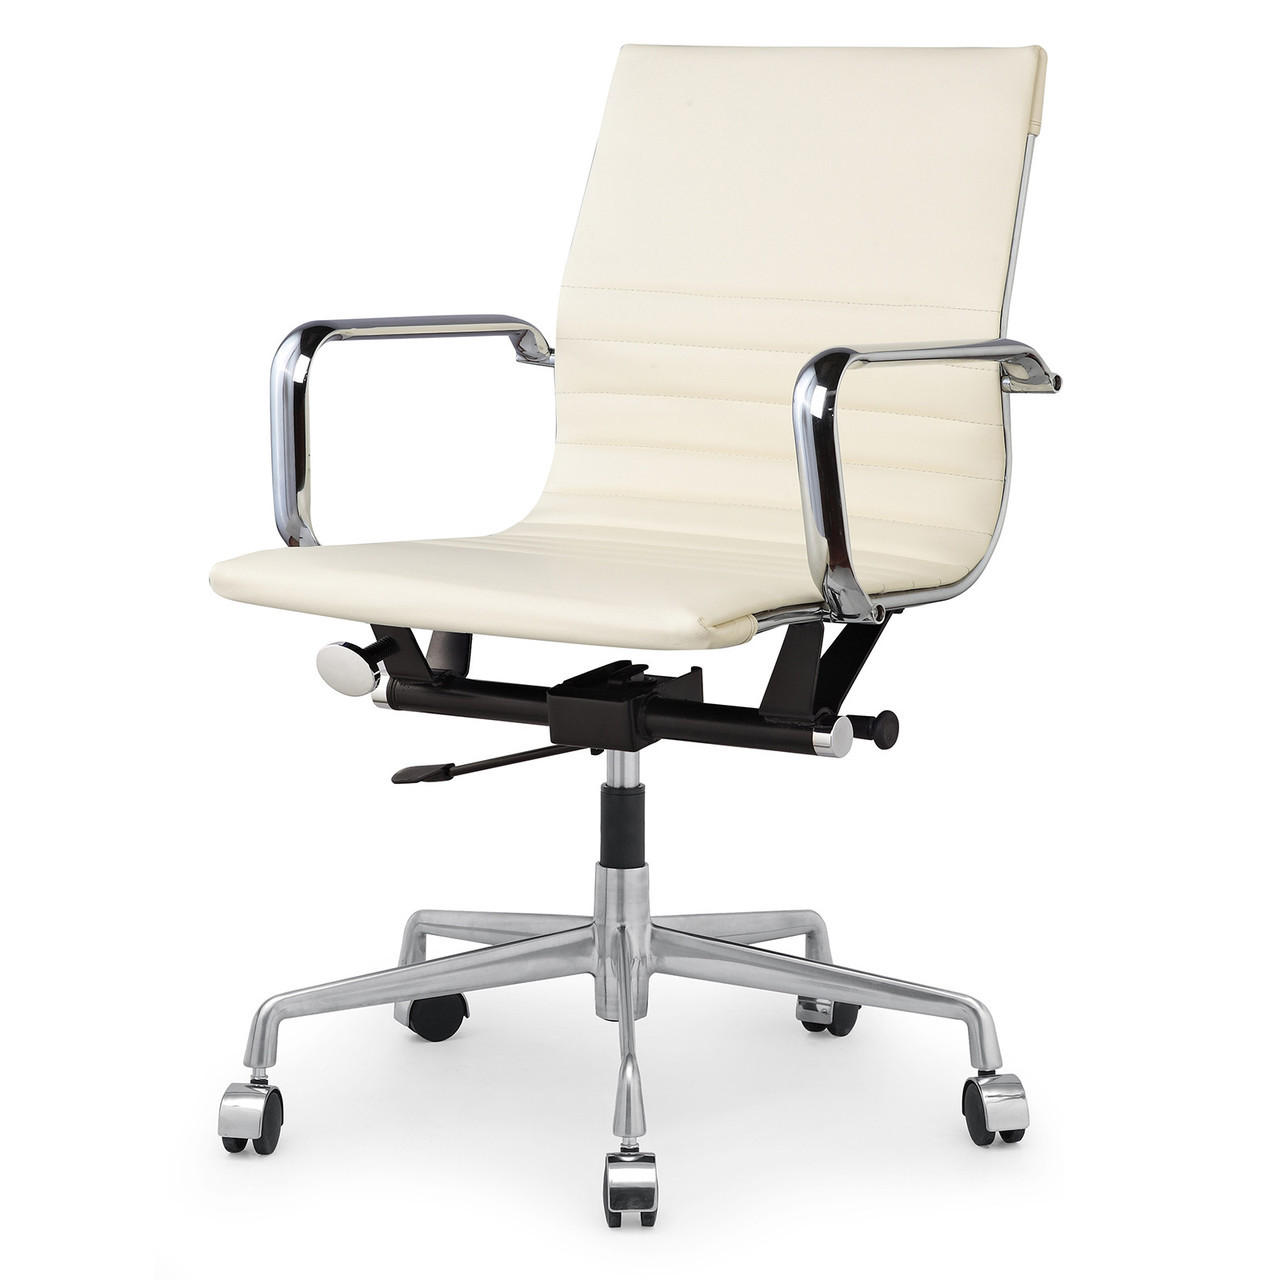 Cream Vegan Leather M348 Modern Office Chairs  72178.1433823747 ?c=2&imbypass=on